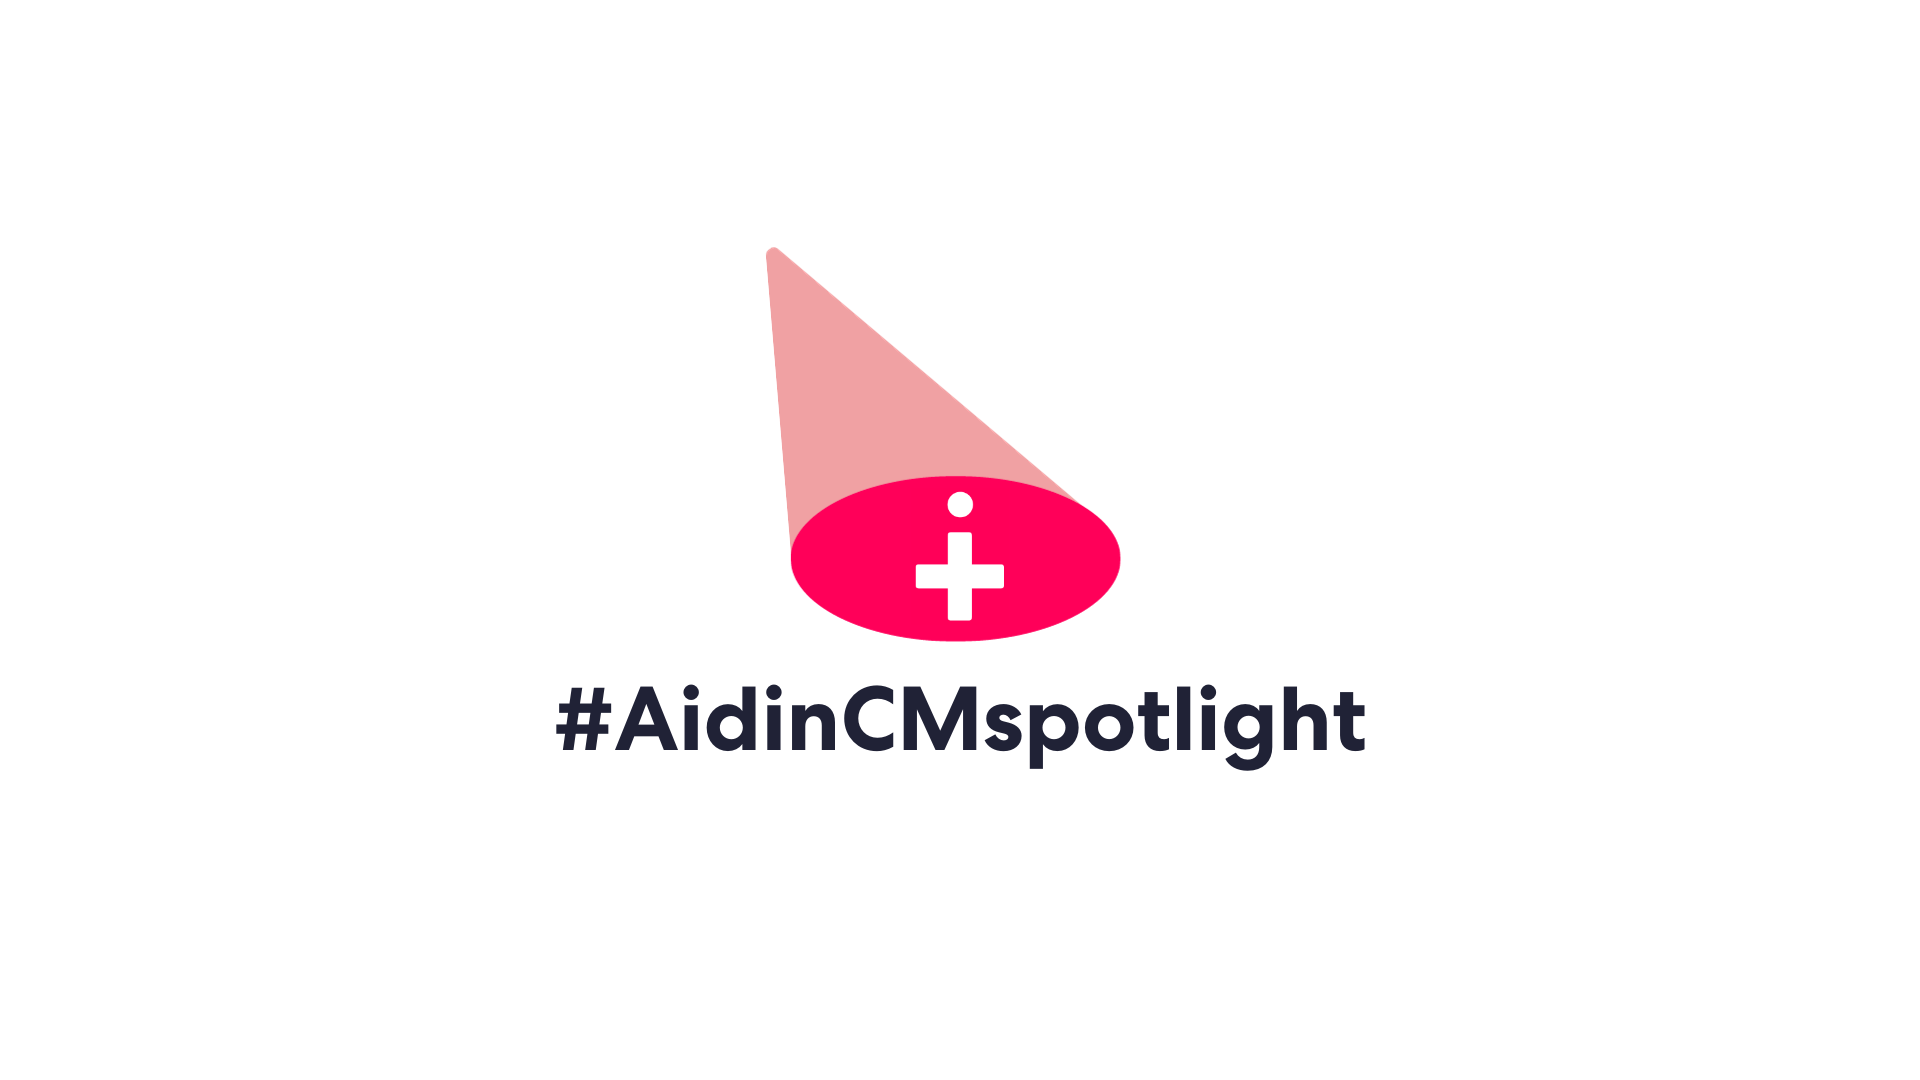 AidinCMspotlight logo